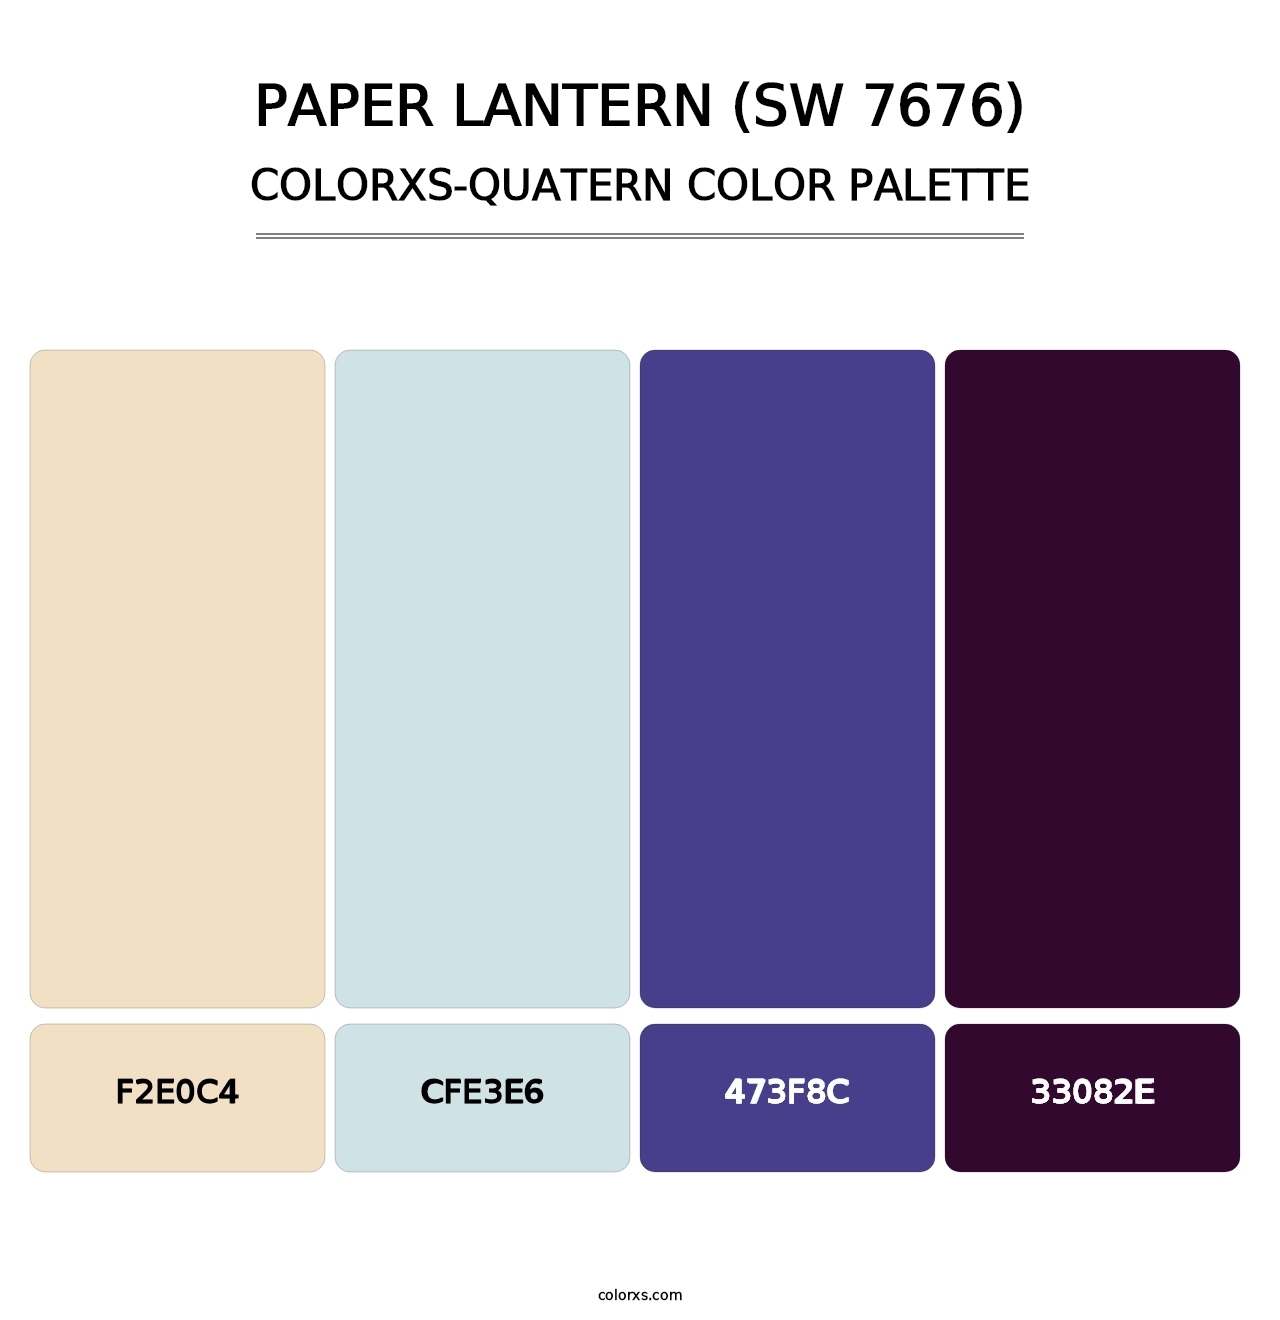 Paper Lantern (SW 7676) - Colorxs Quatern Palette